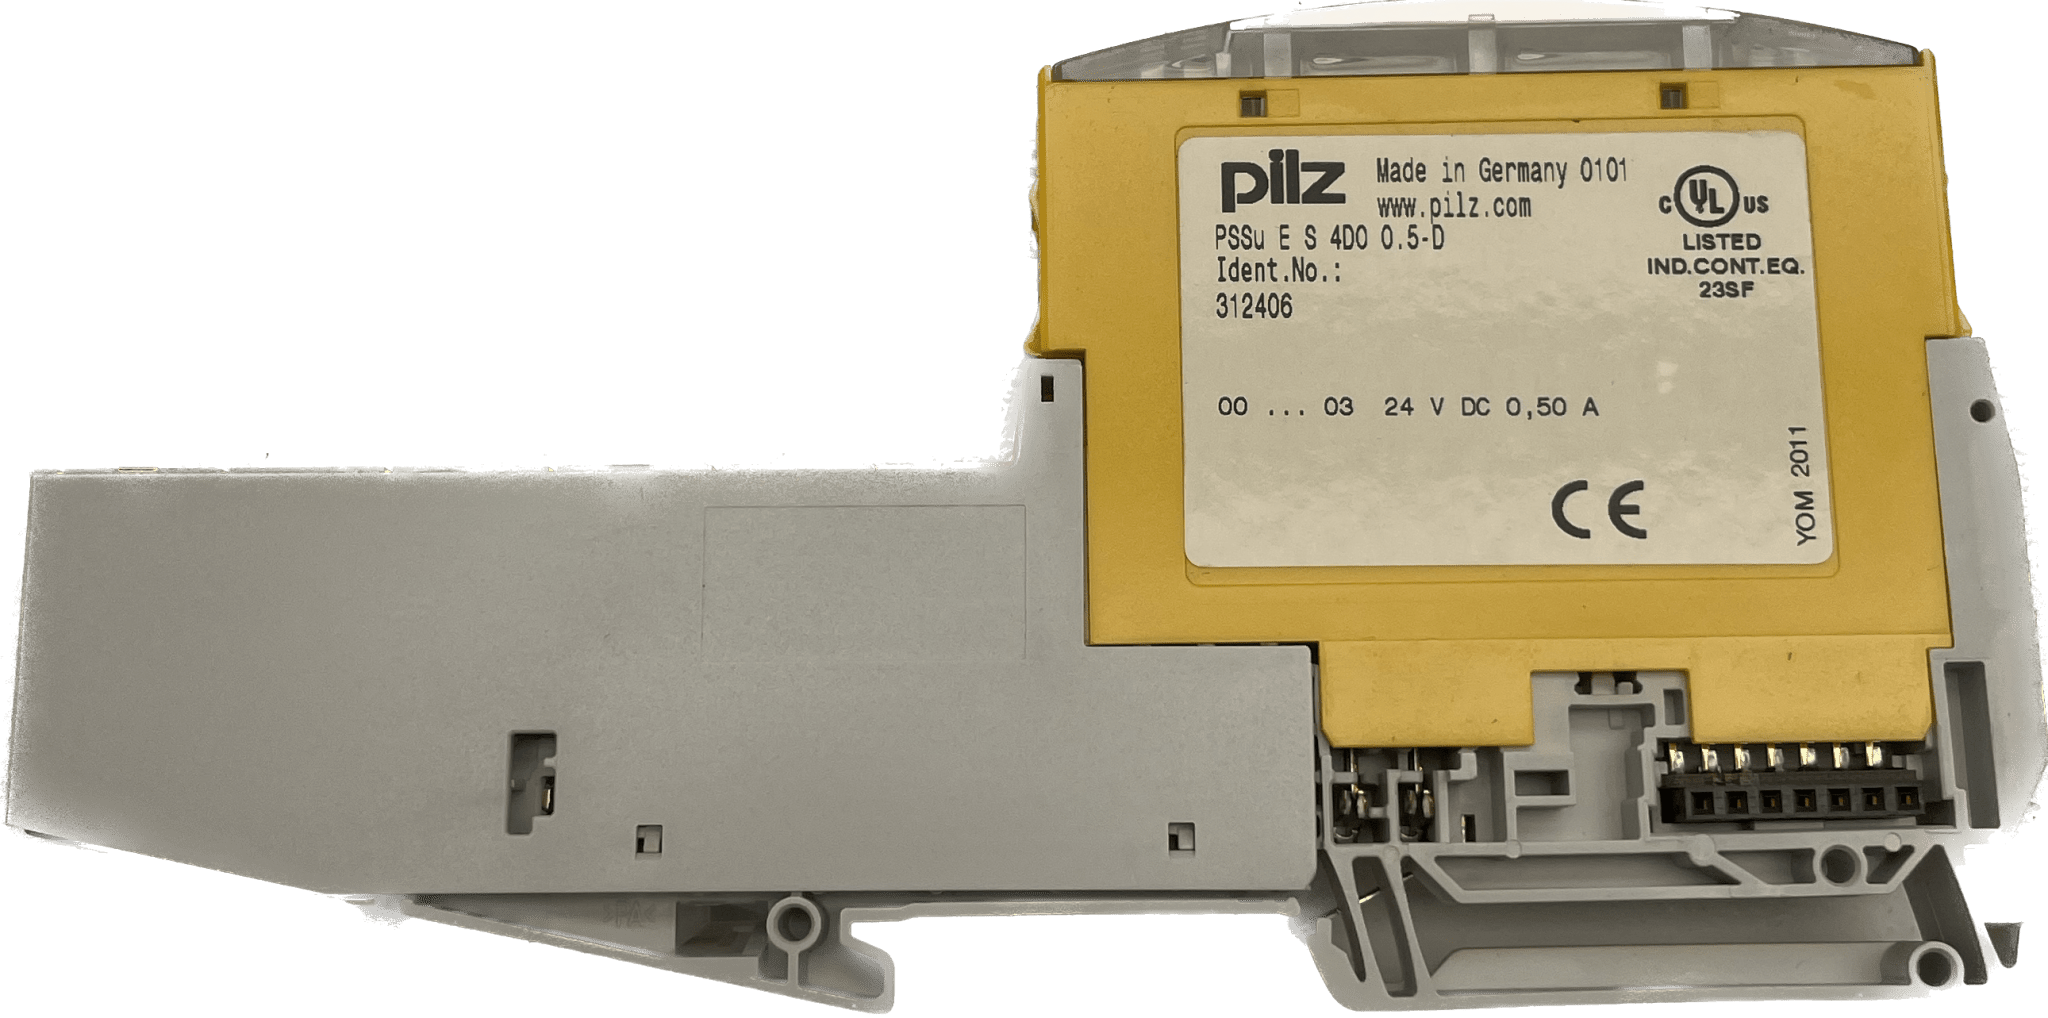 Pilz PSSu E S 4DO 0.5-D 312406 - #product_category# | Klenk Maschinenhandel